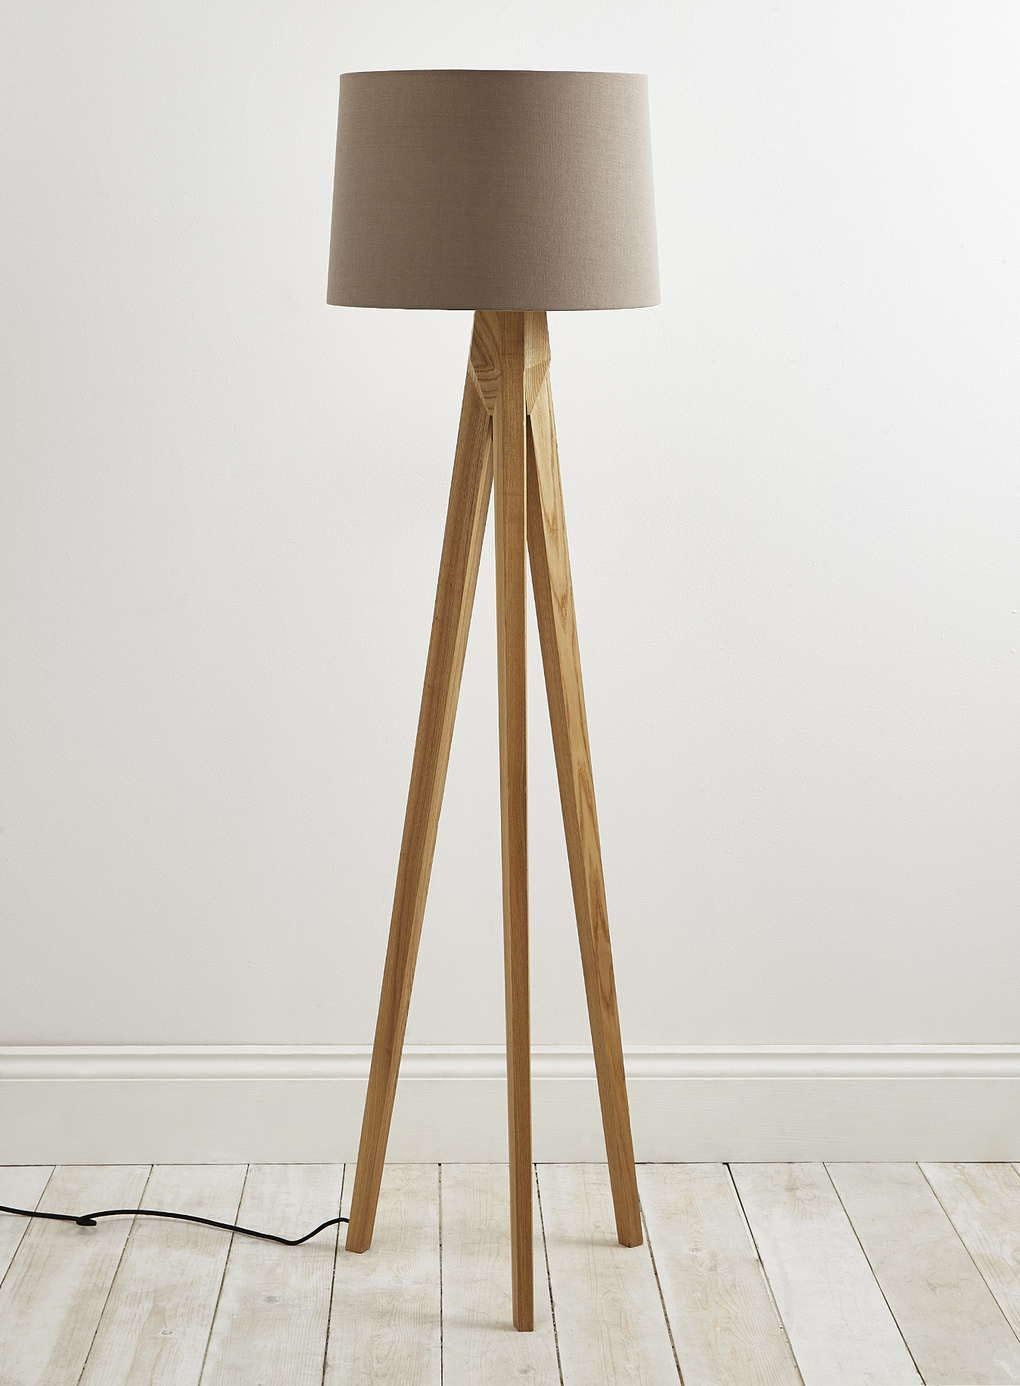 Tripod Floor Lamp Wooden Legs In 2019 Wooden Floor Lamps inside size 1020 X 1386